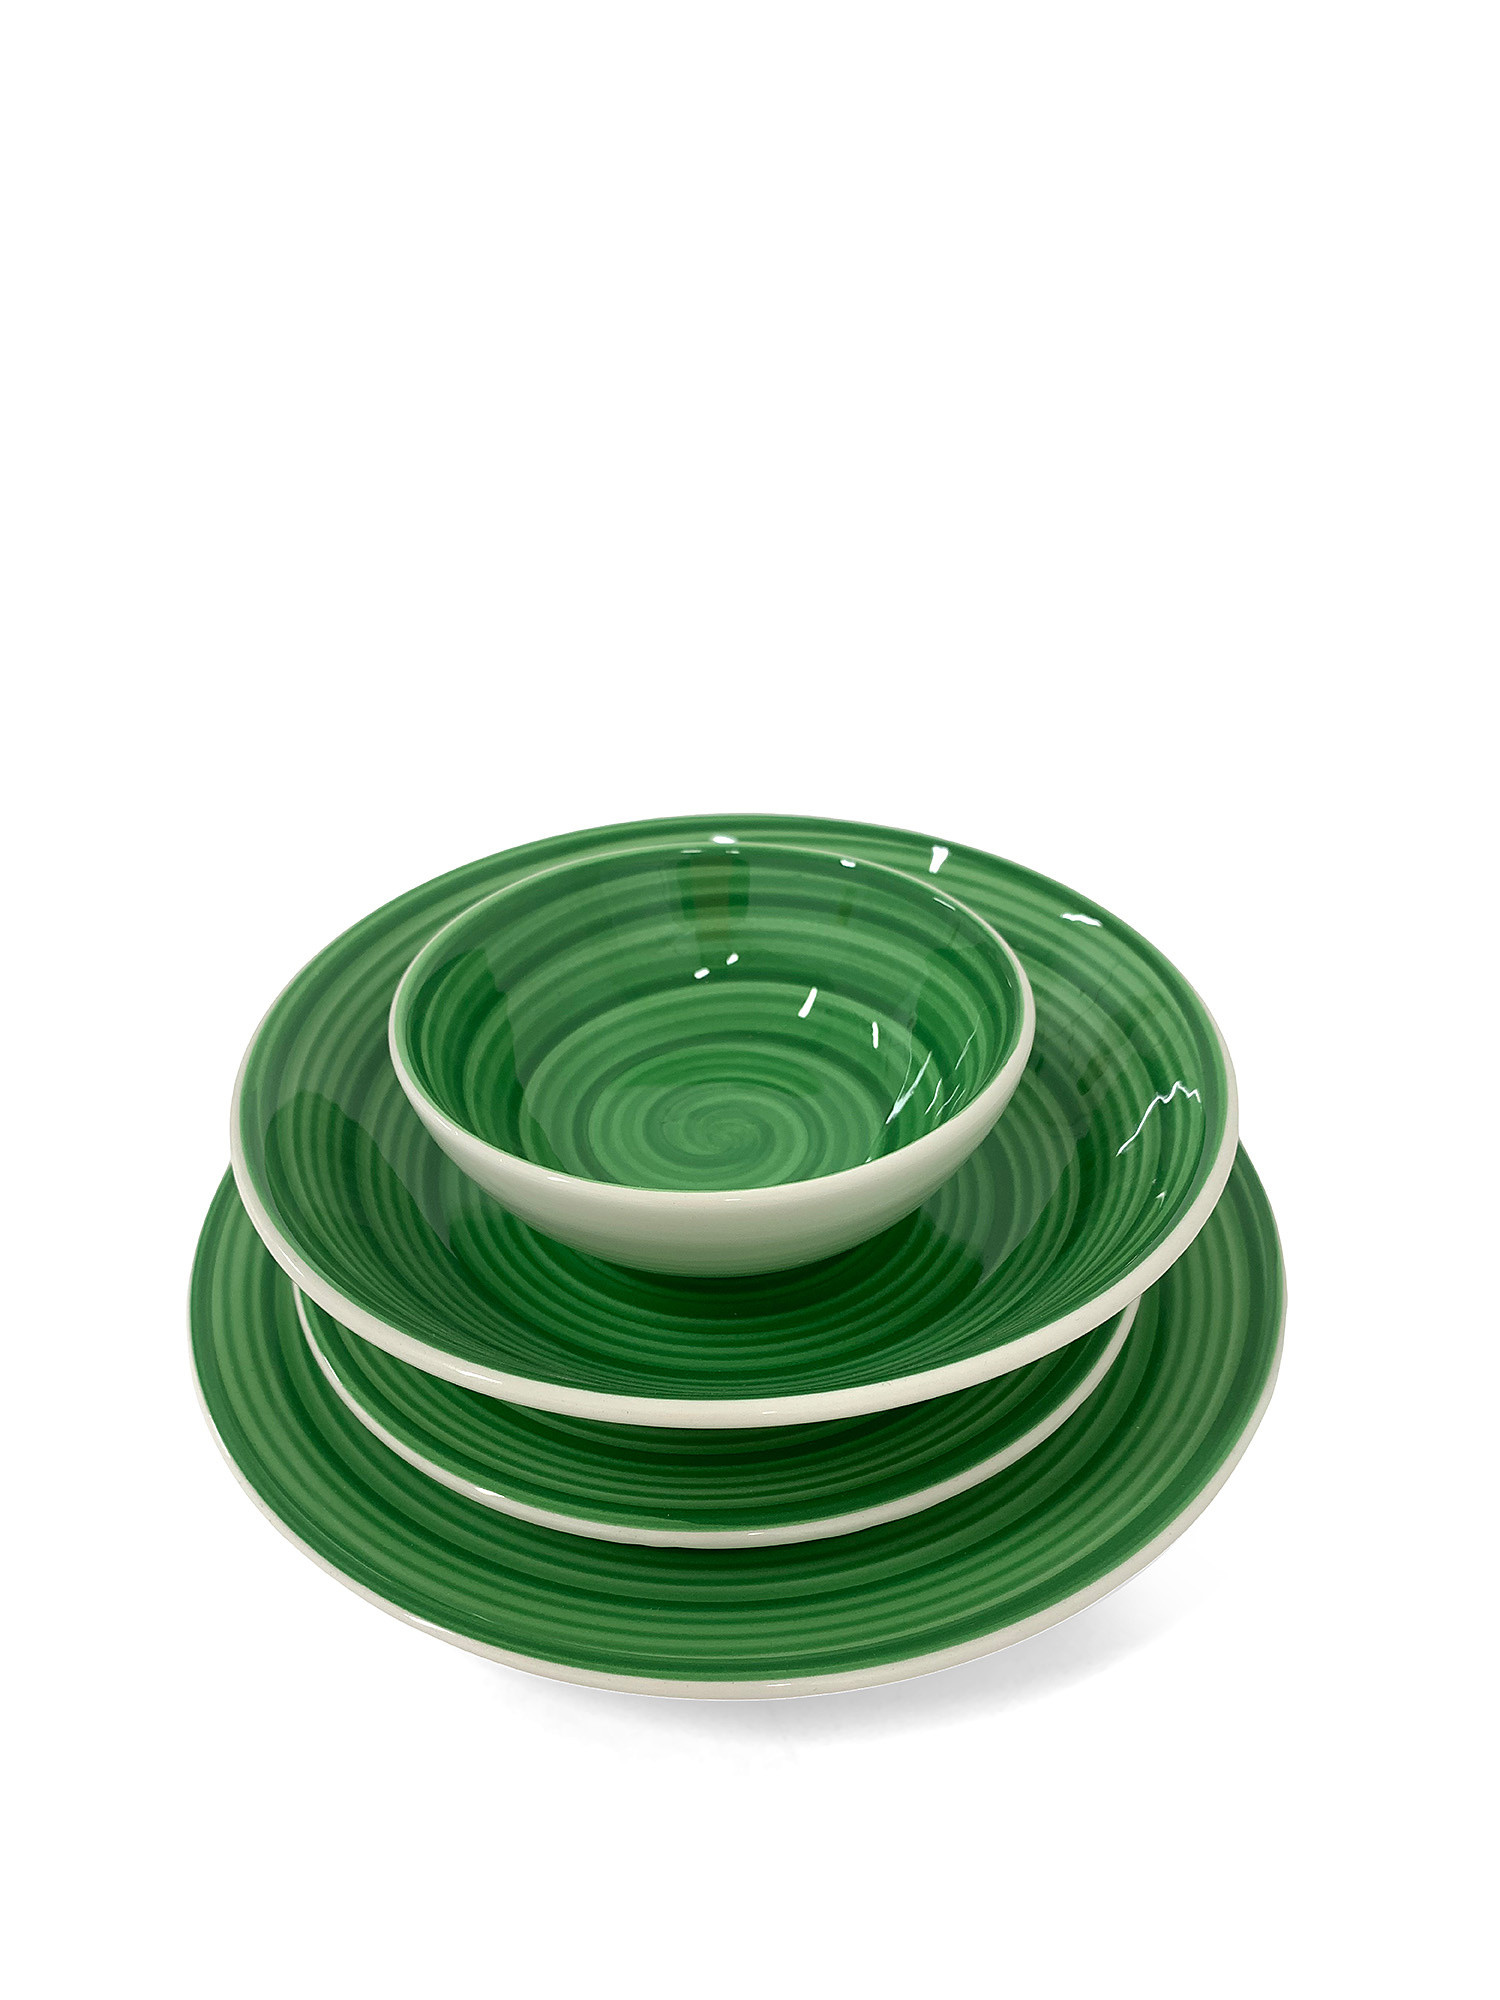 Coppetta ceramica dipinta a mano Spirale, Verde, large image number 1